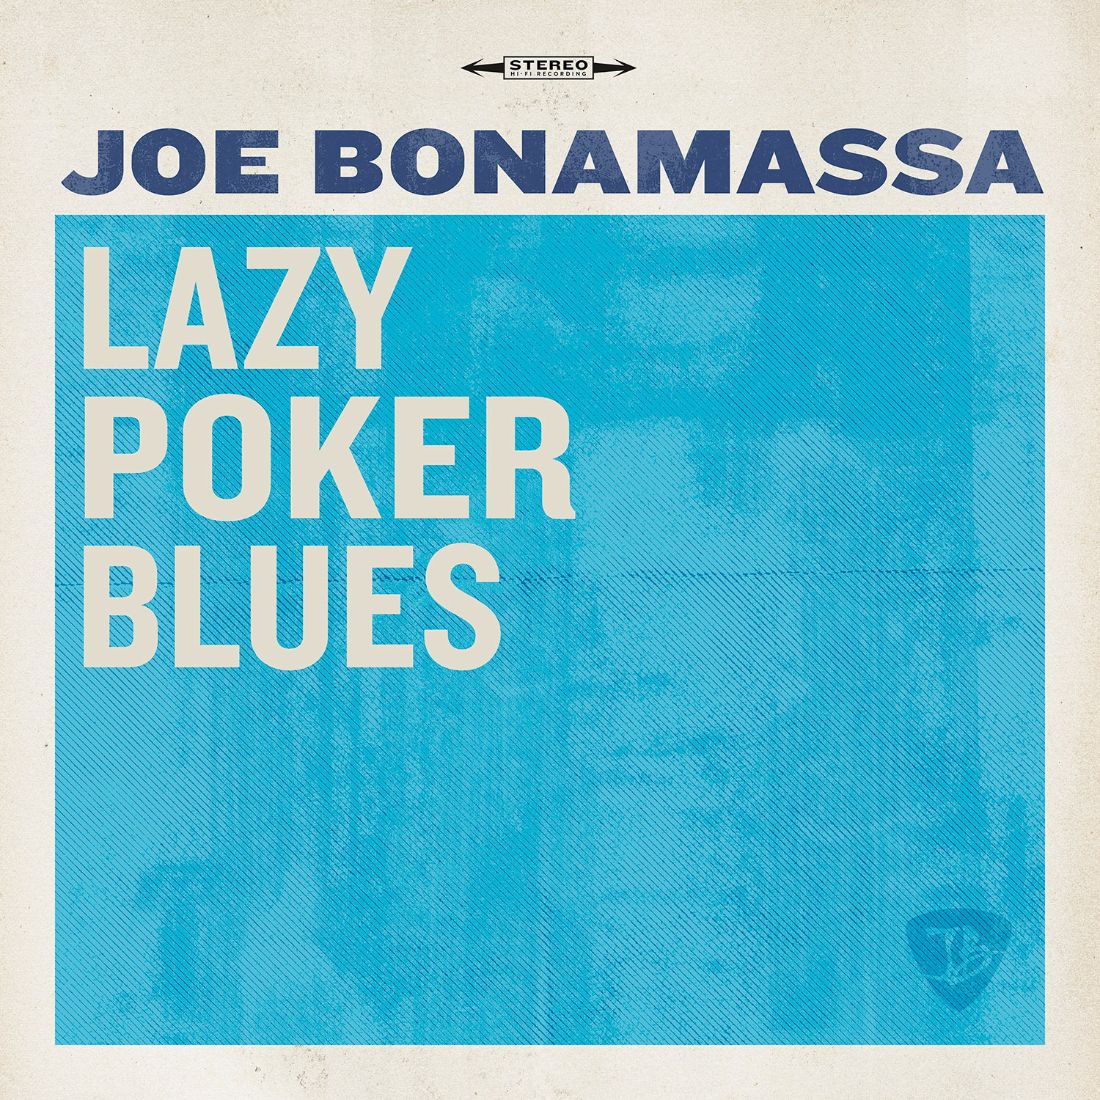 Joe Bonamassa “Lazy Poker Blues” single artwork